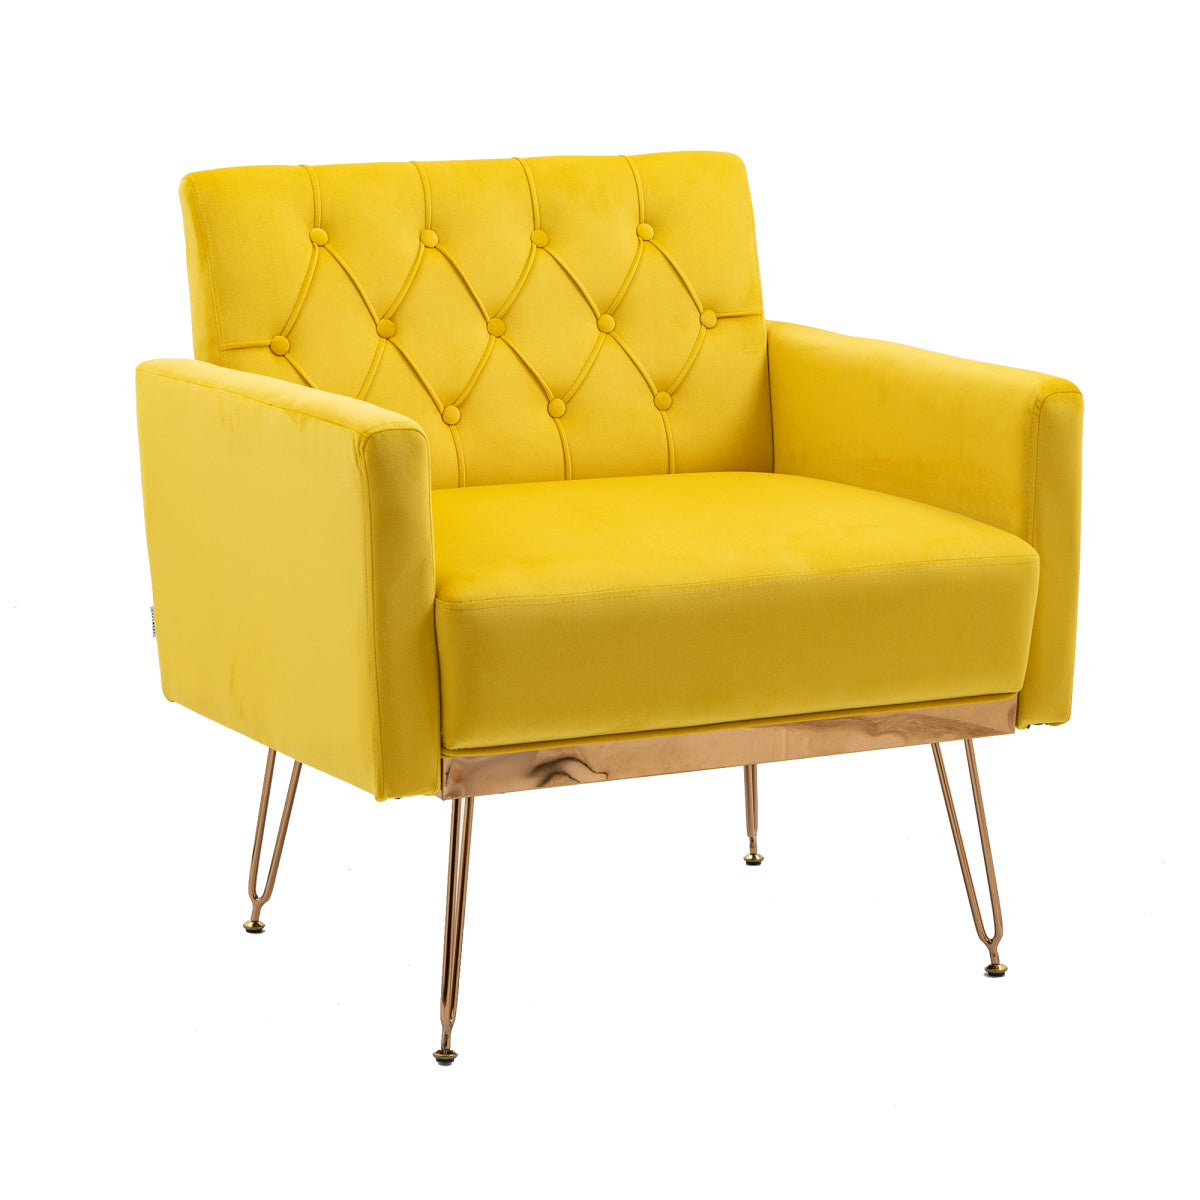 Simplie Fun Accent Chair,leisure Single Sofa With Rose Golden Feet,mustard